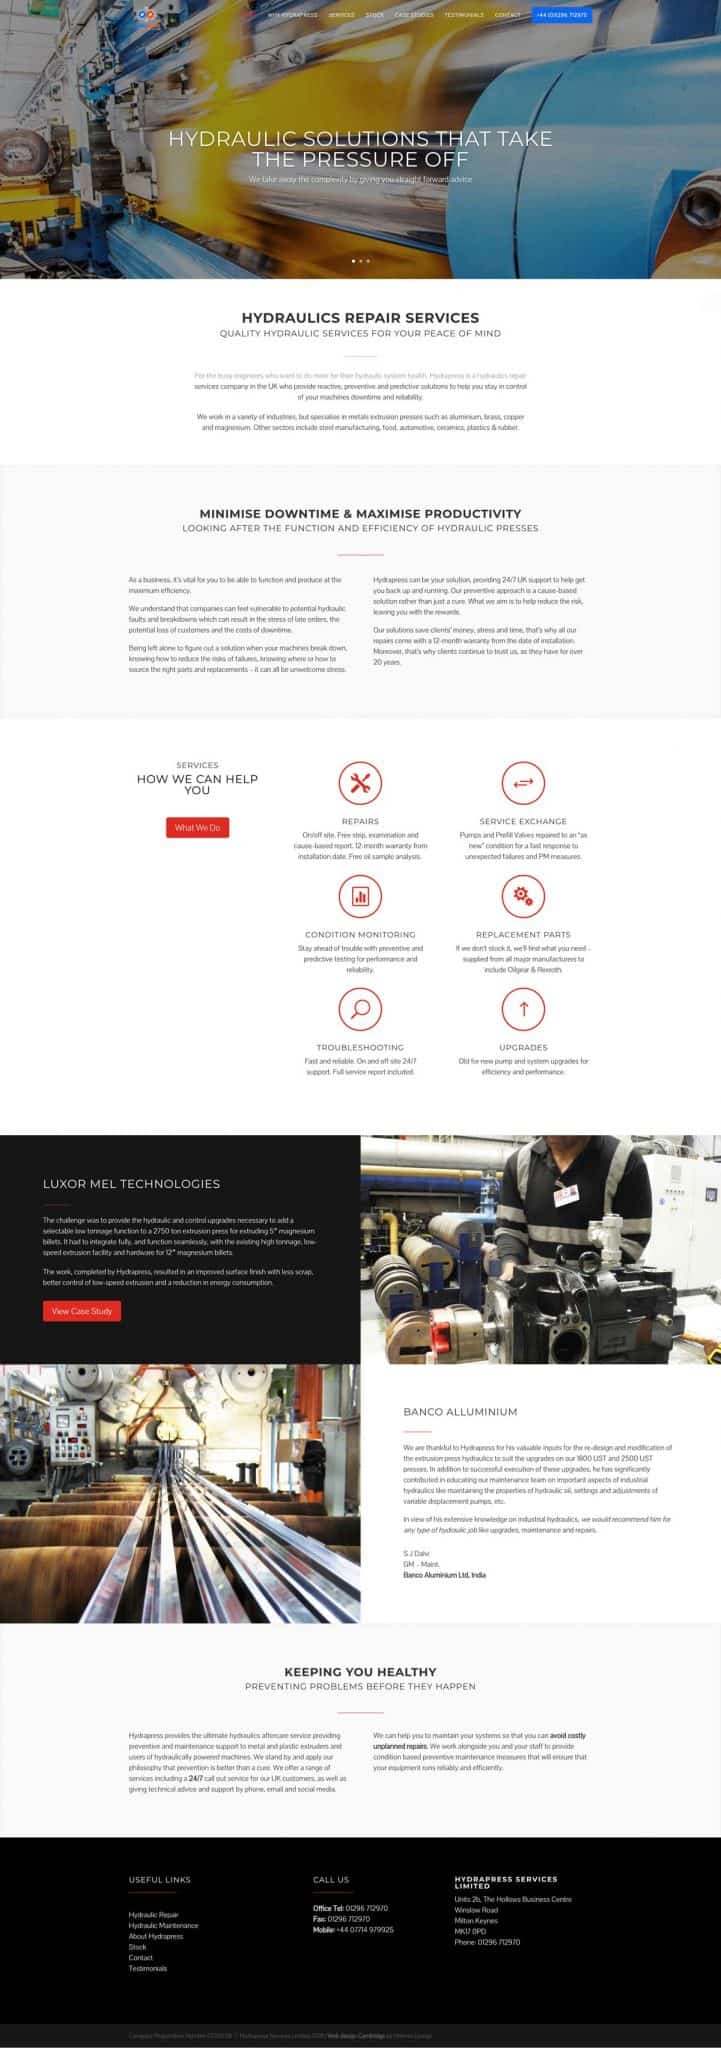 hydrapress home page